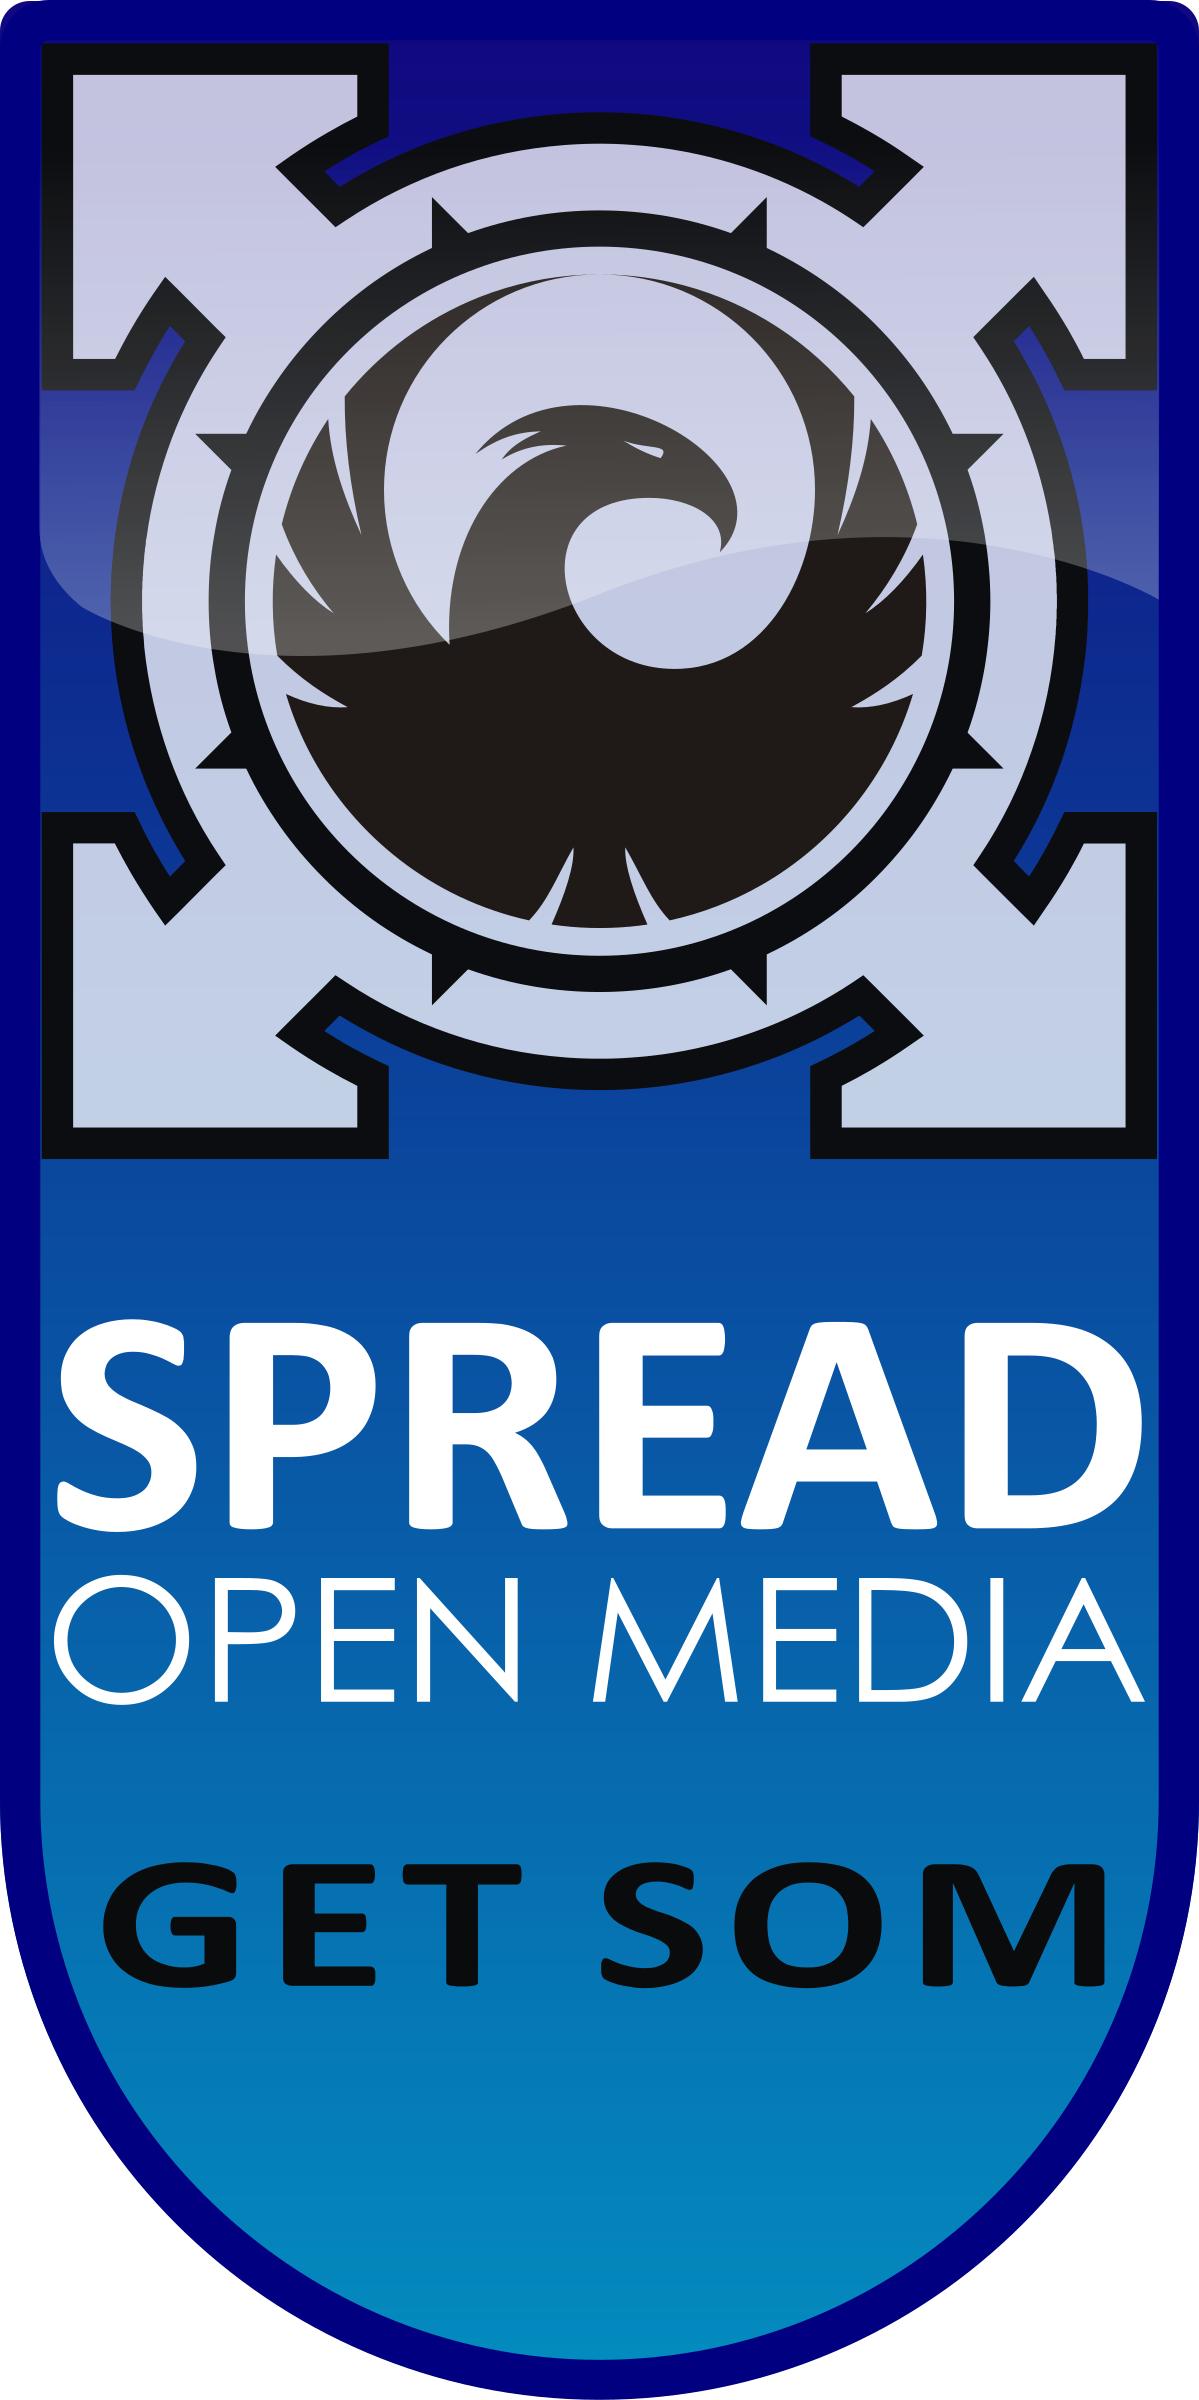 Get SOM - Spread Open Media icons